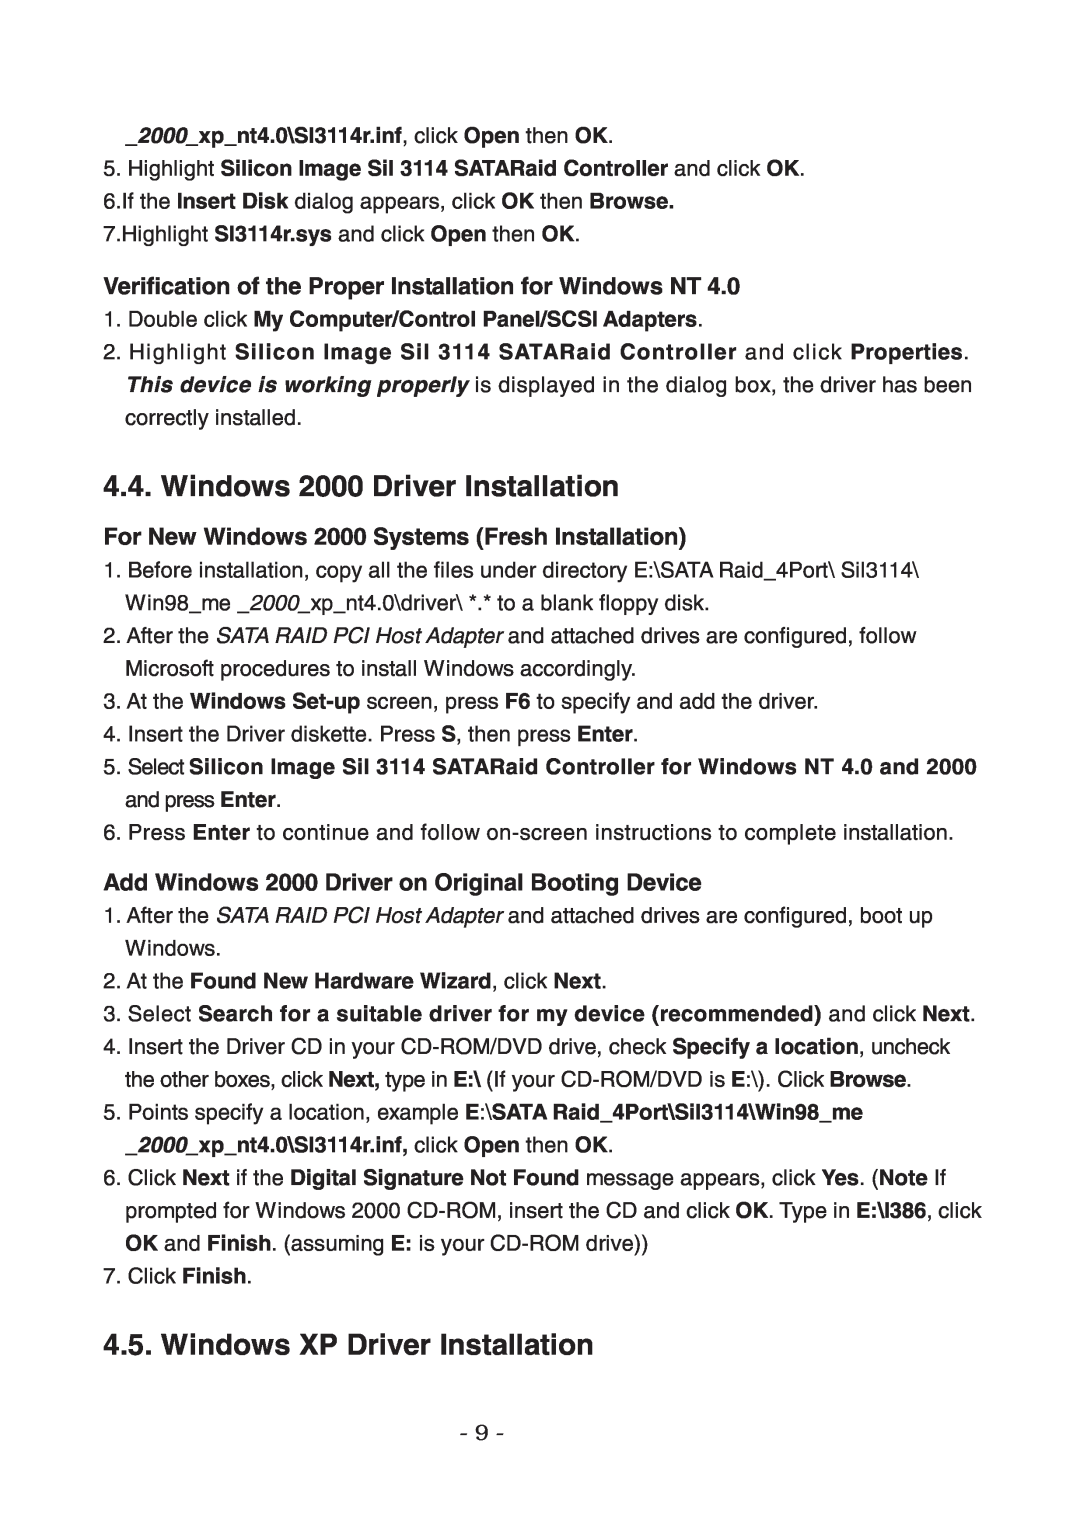 Lindy 70541 Windows 2000 Driver Installation, Windows XP Driver Installation, 2000xpnt4.0\Sl3114r.inf, click Open then OK 